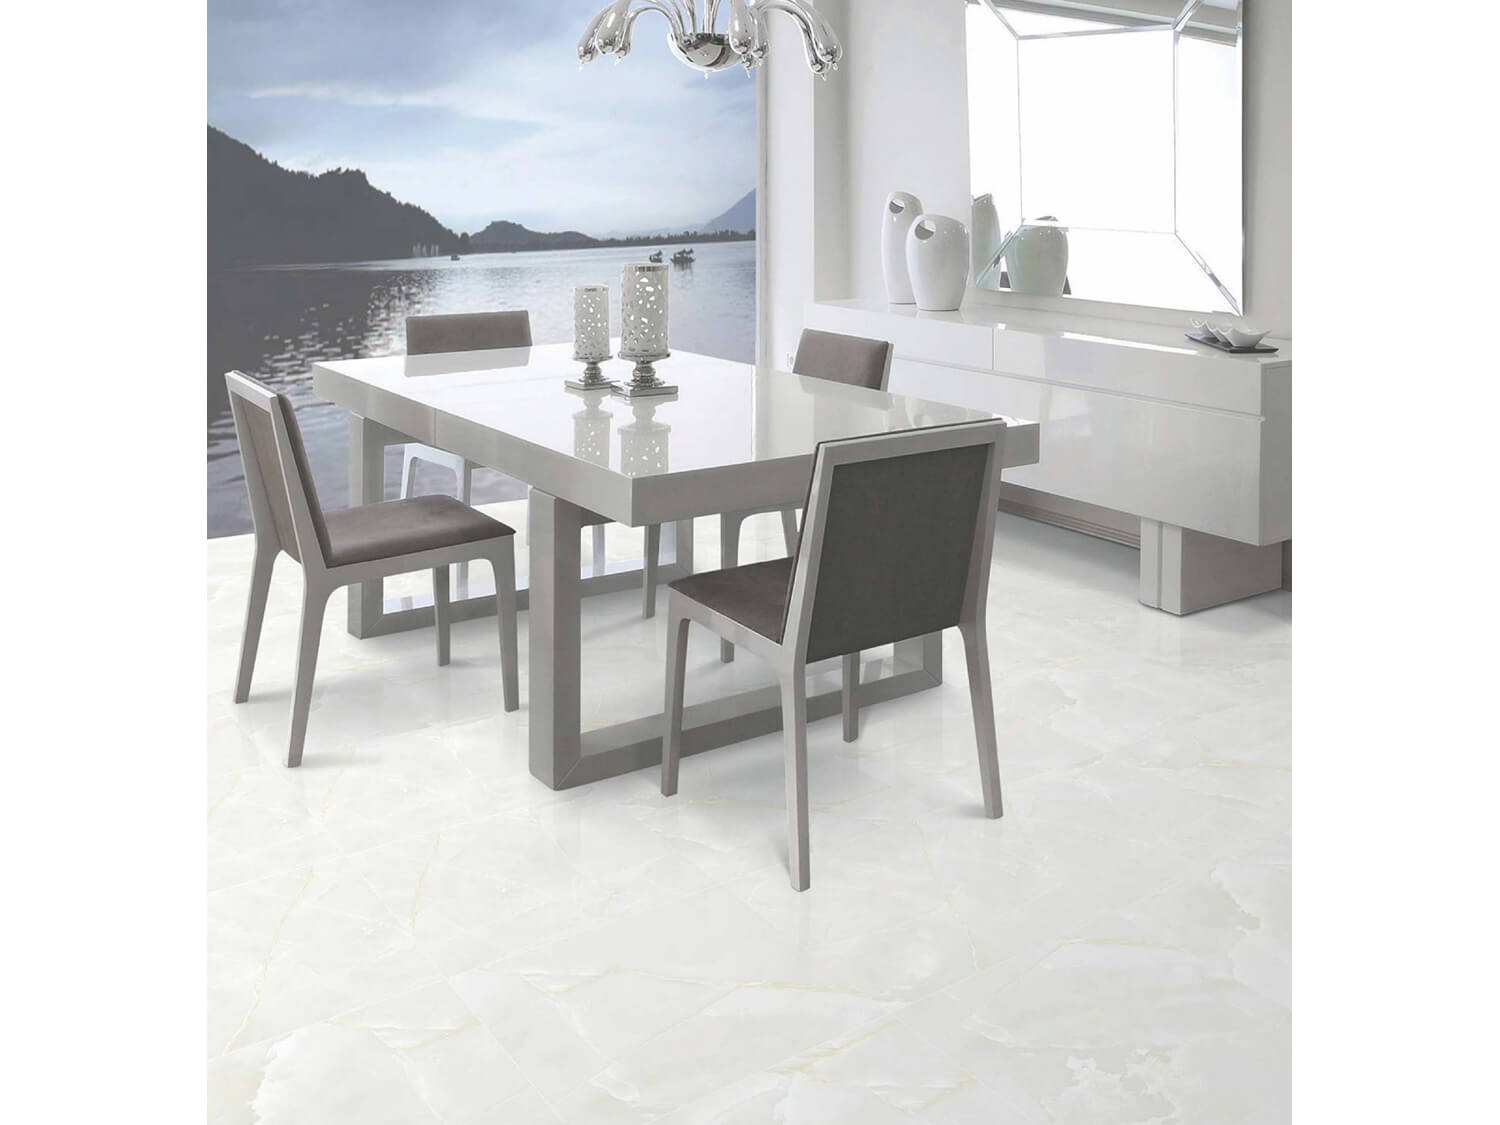 Pearl Onyx Porcelain Floor Tile